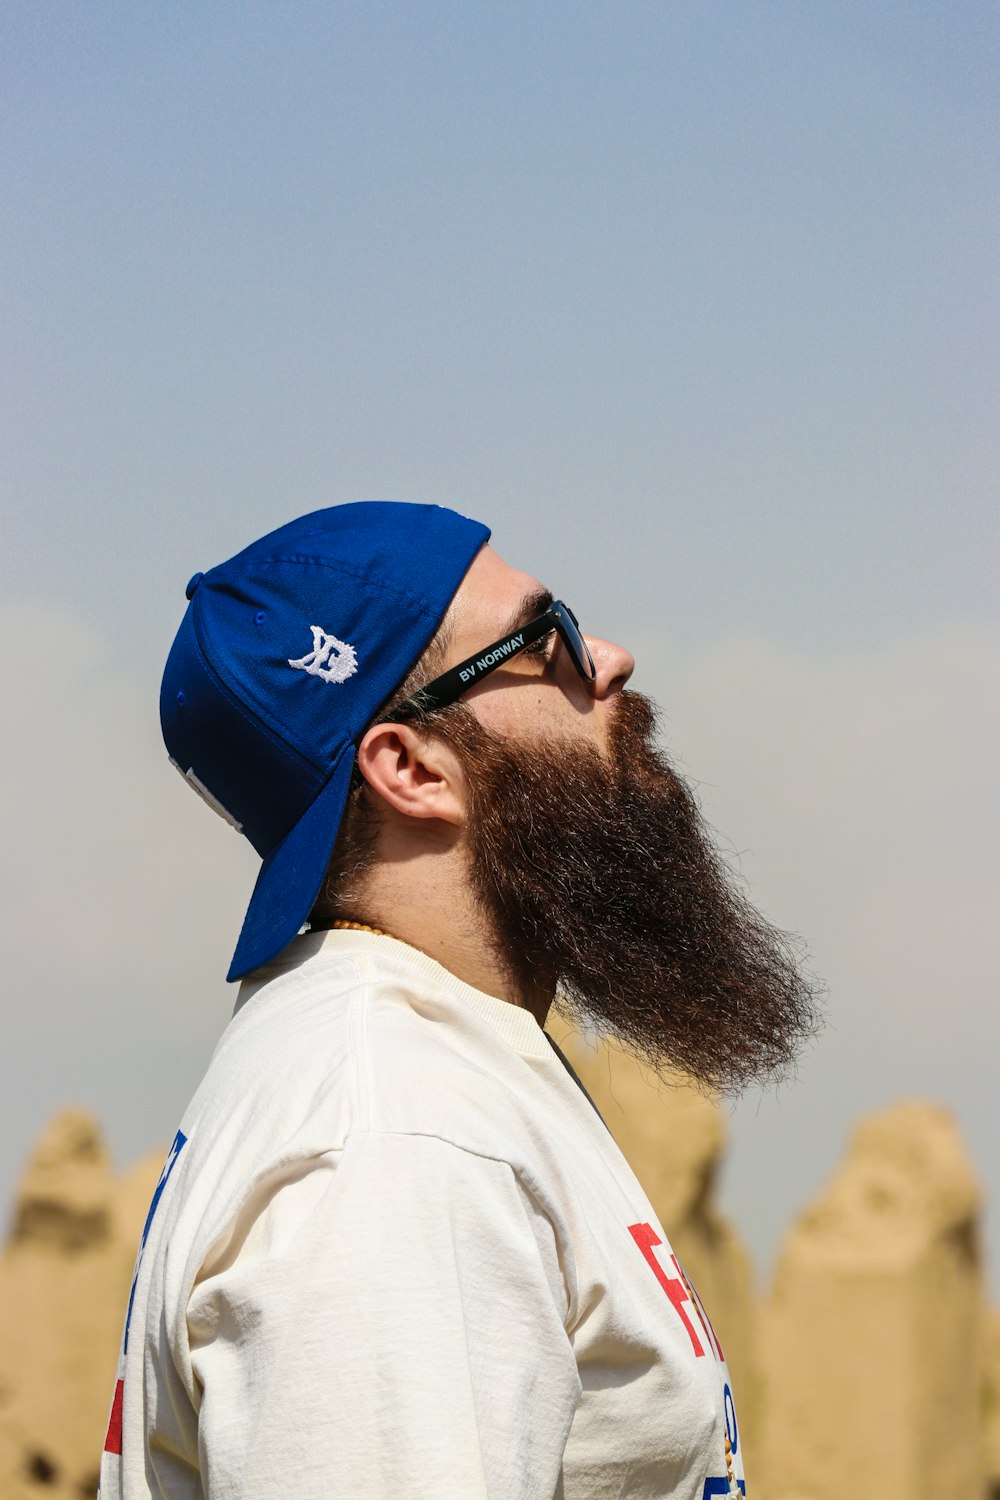 a man with a long beard wearing a blue hat